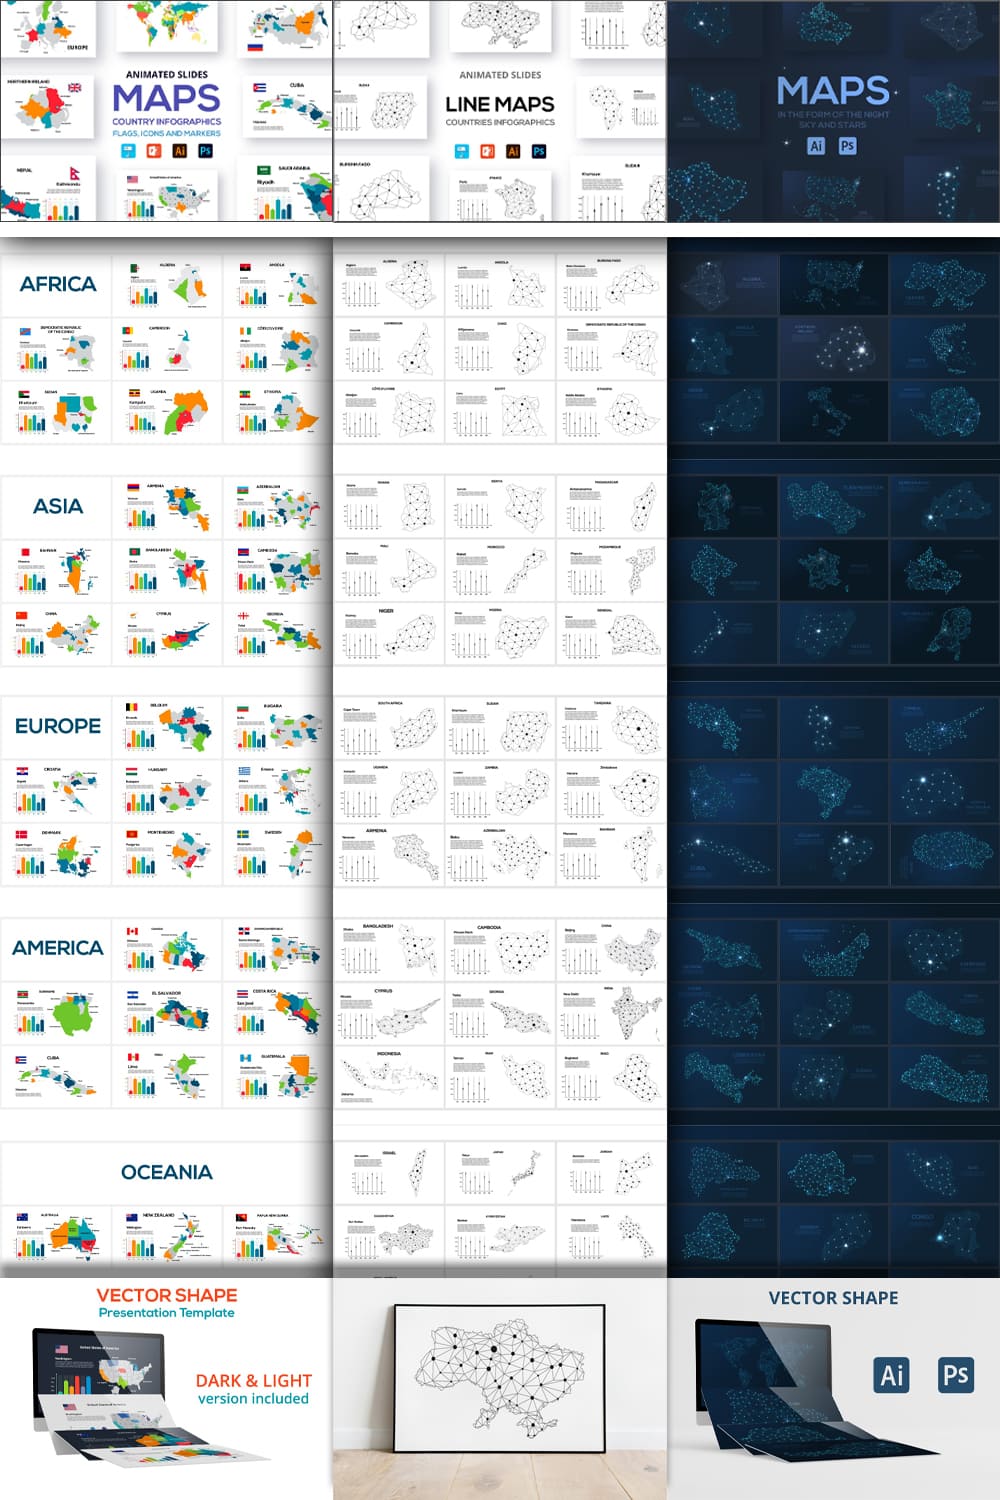 Maps Animated Presentations pinterest image.